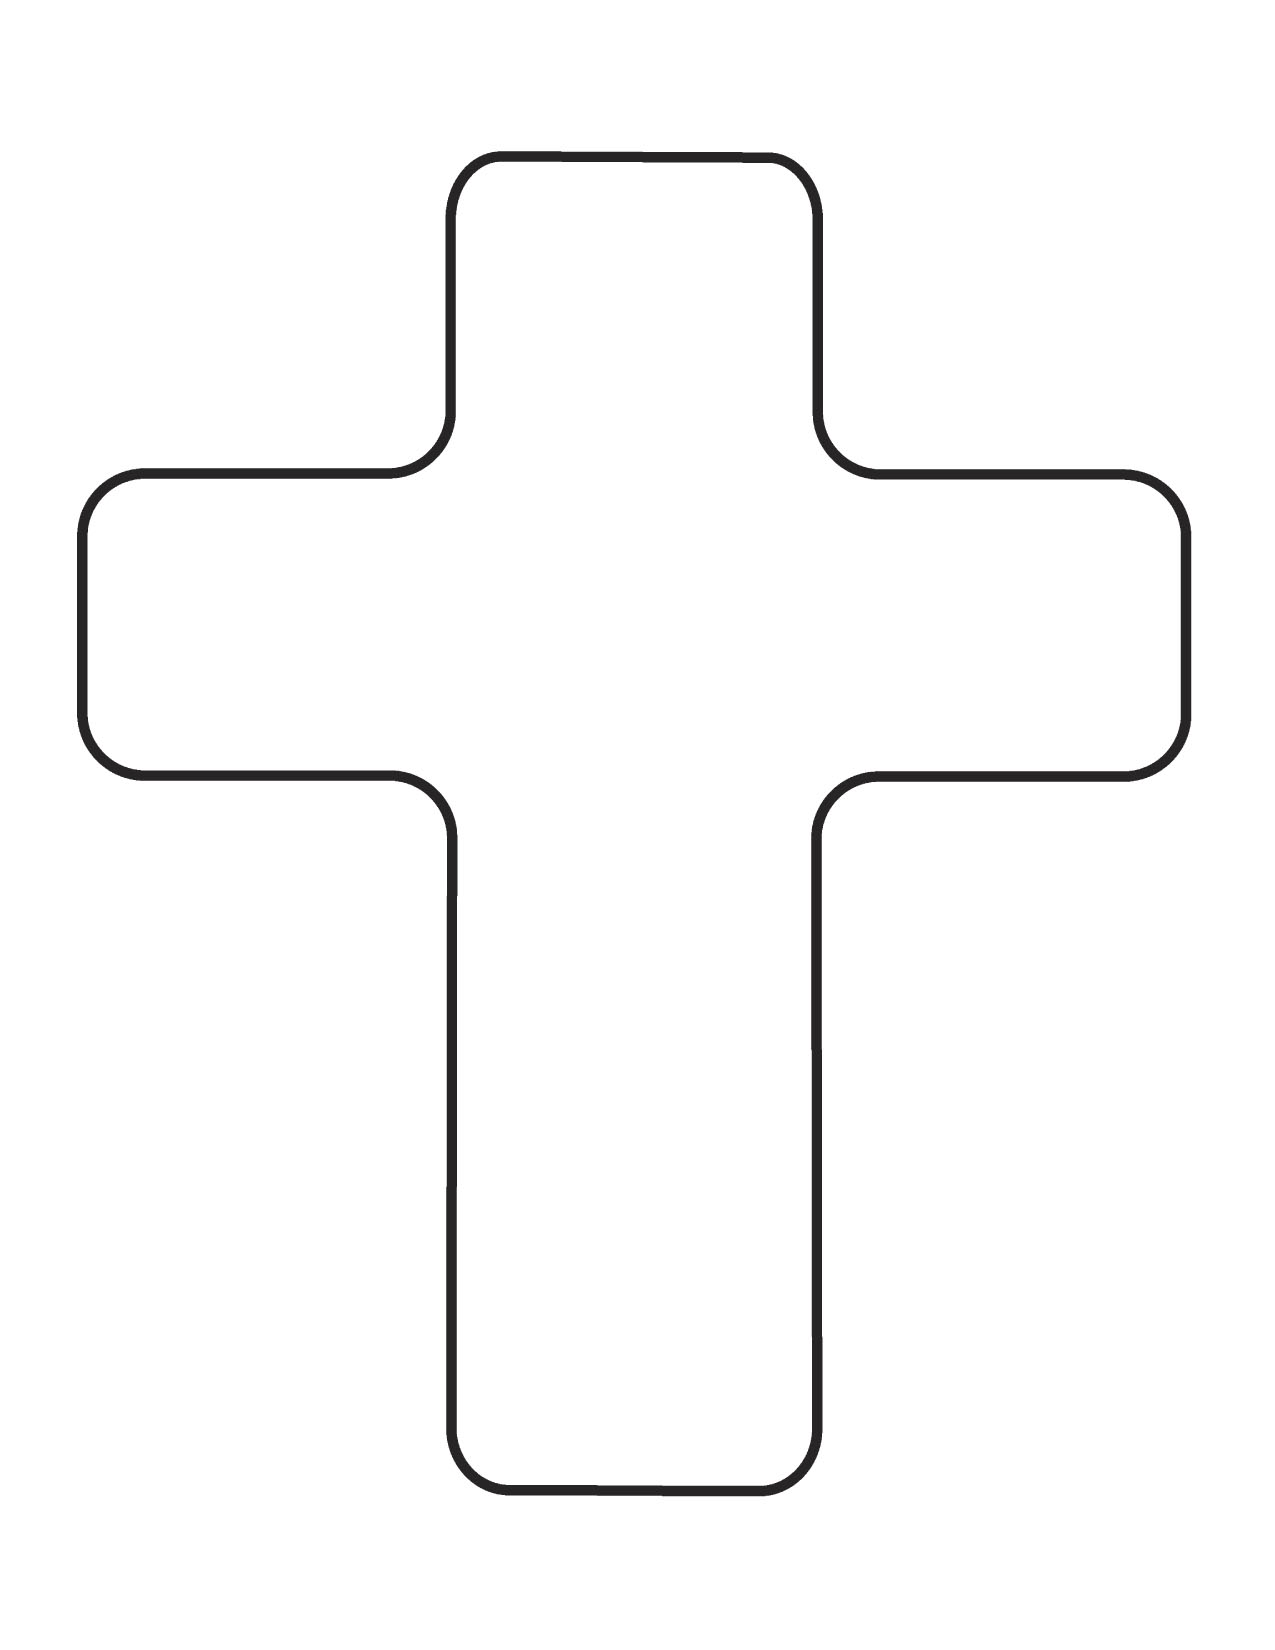 Christian Cross Drawing - ClipArt Best